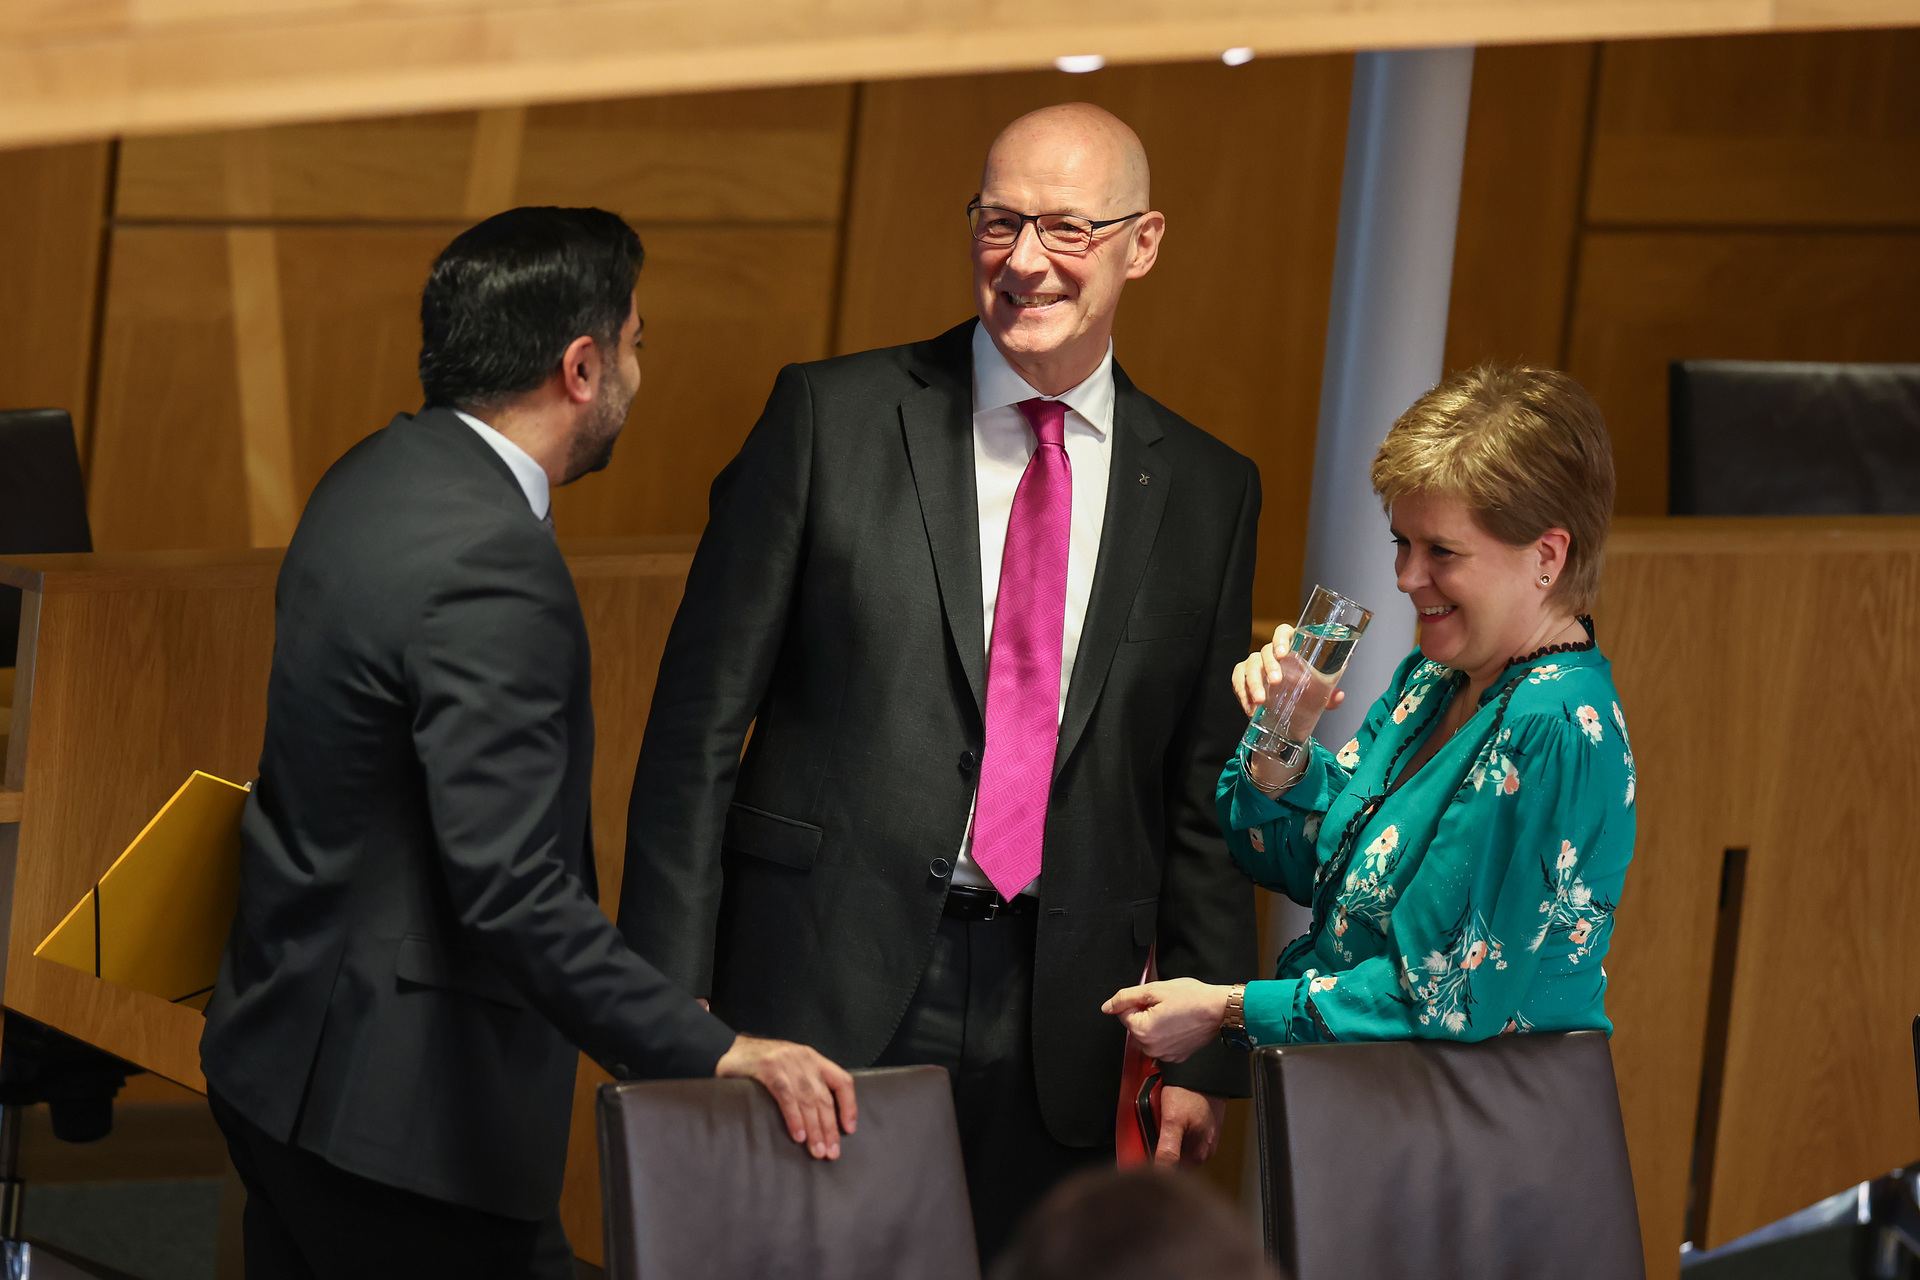 Humza Yousaf, John Swinney and Nicola Sturgeon chatting in Holyrood - Scotland's last three first ministers.